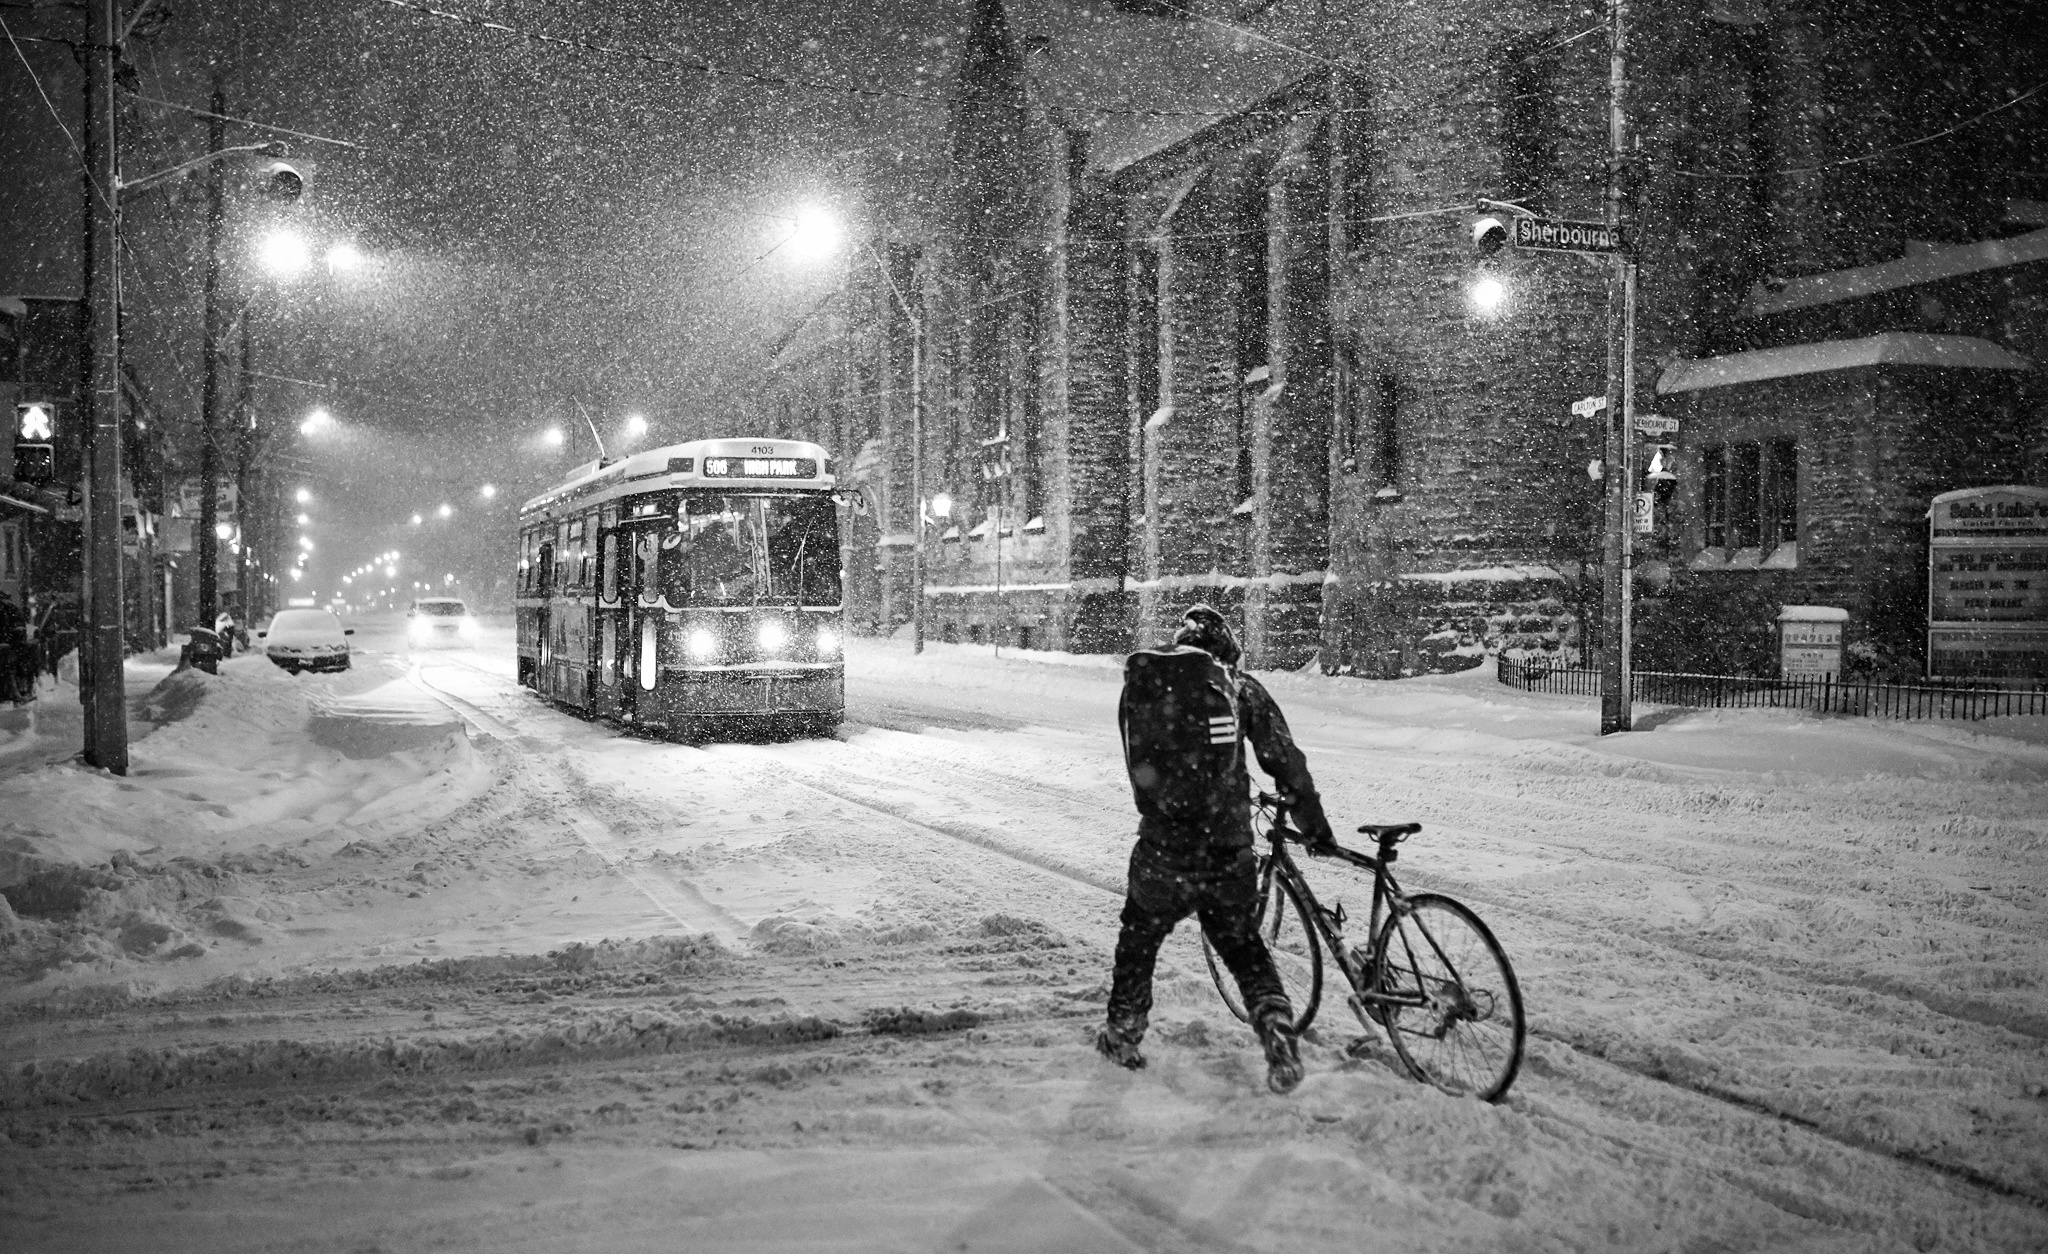 snowy-night_bike_streetcar_sherbourne-carlton_01-01-01.jpeg